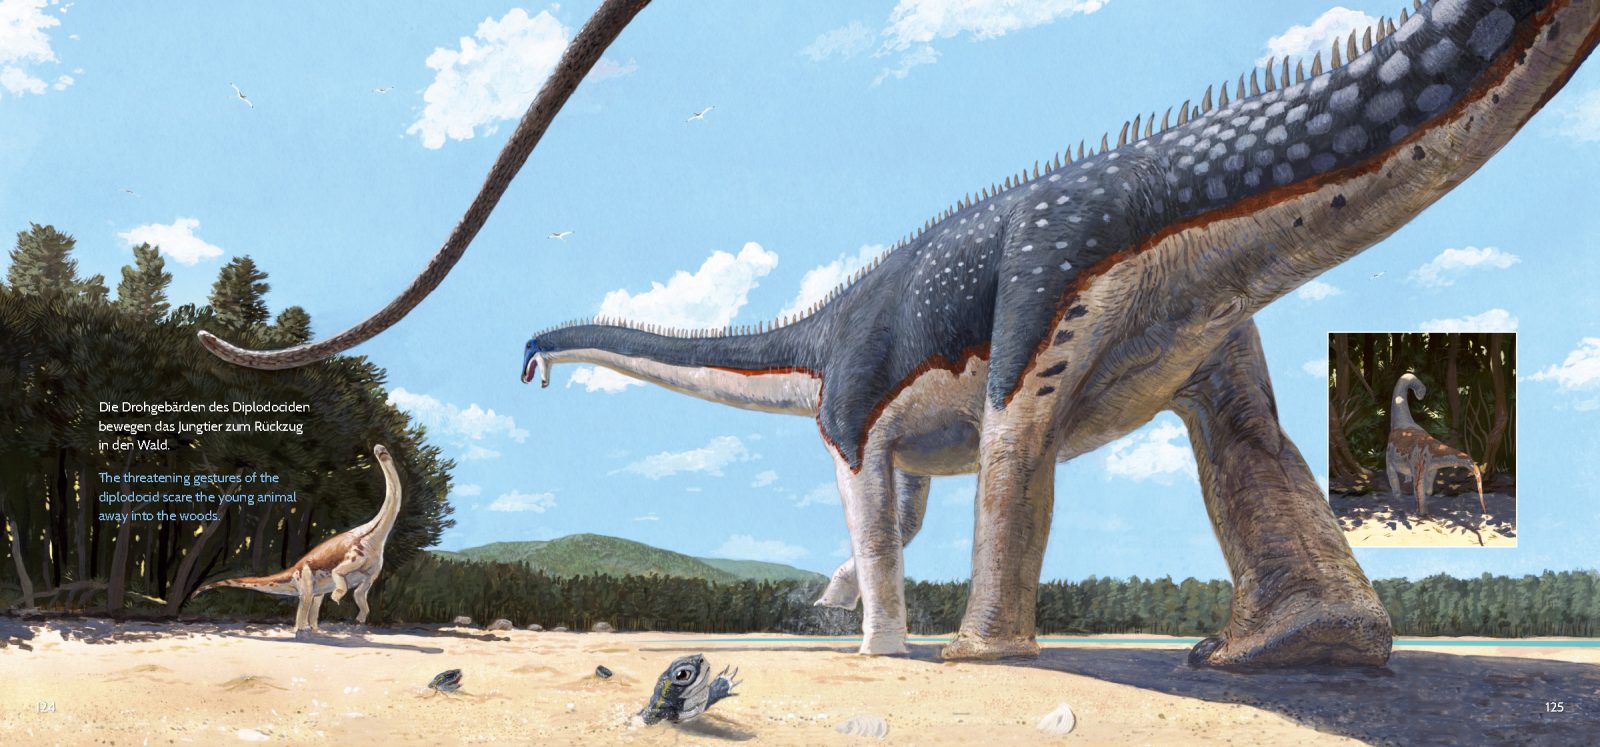 Diplodocid from Europasaurus